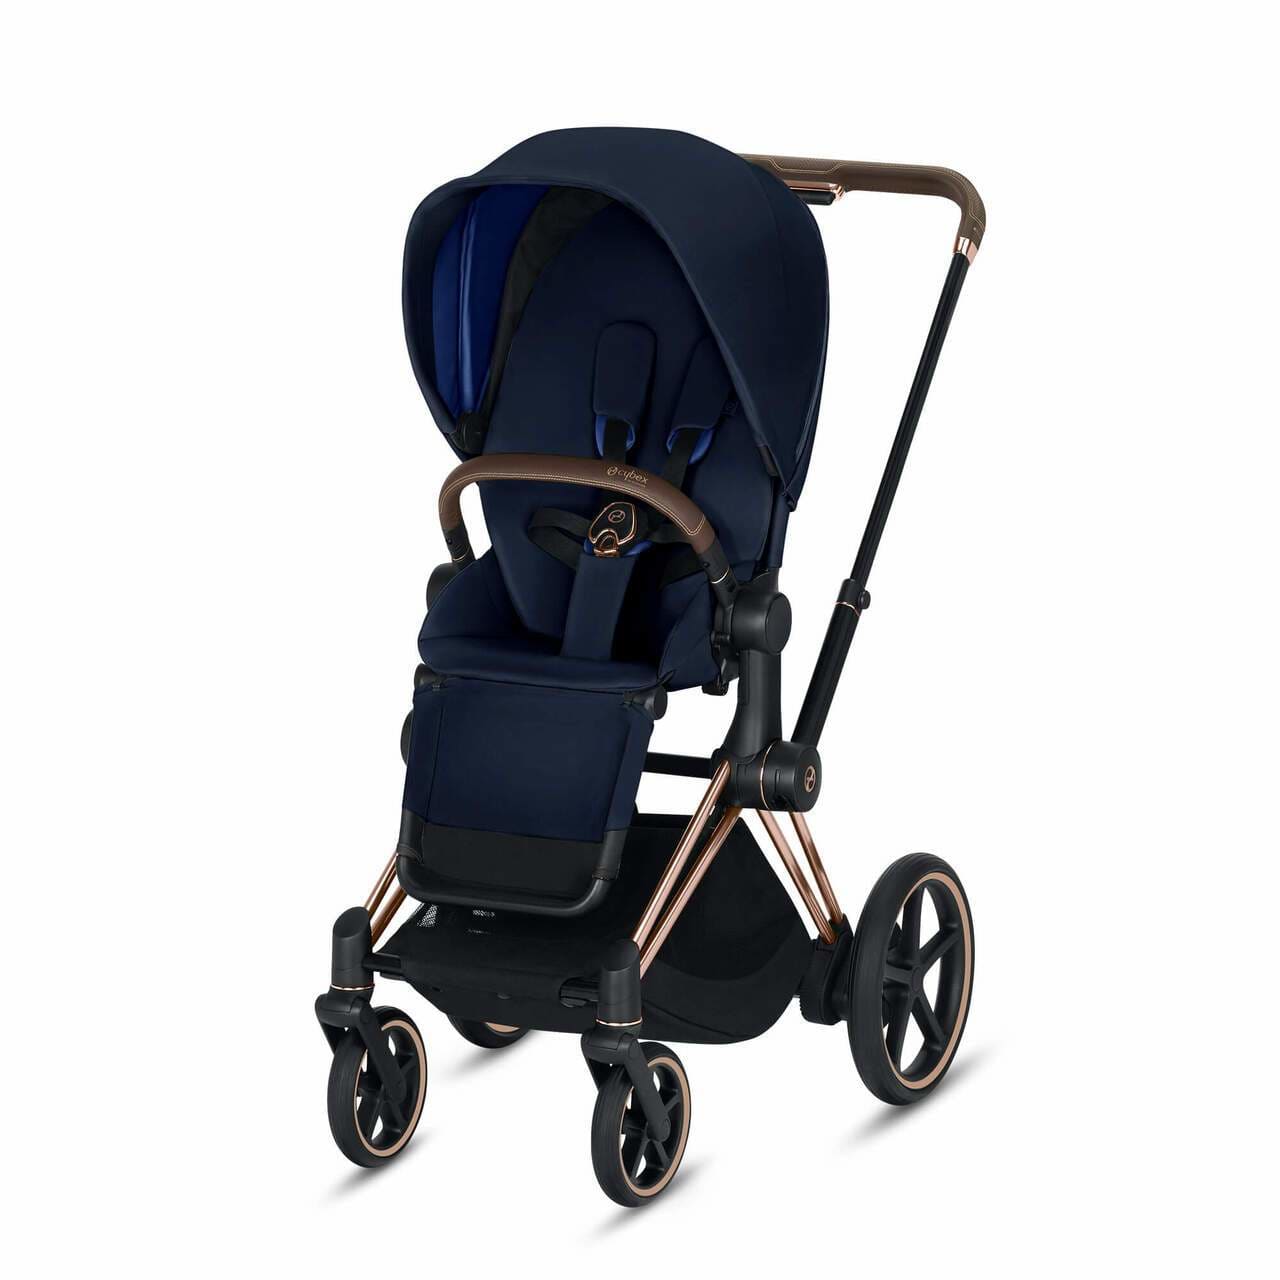 CYBEX ePriam 3-in-1 Travel System Frame in Rose Gold with Brown Details Baby Stroller – Indigo Blue 519003335 4058511701509
